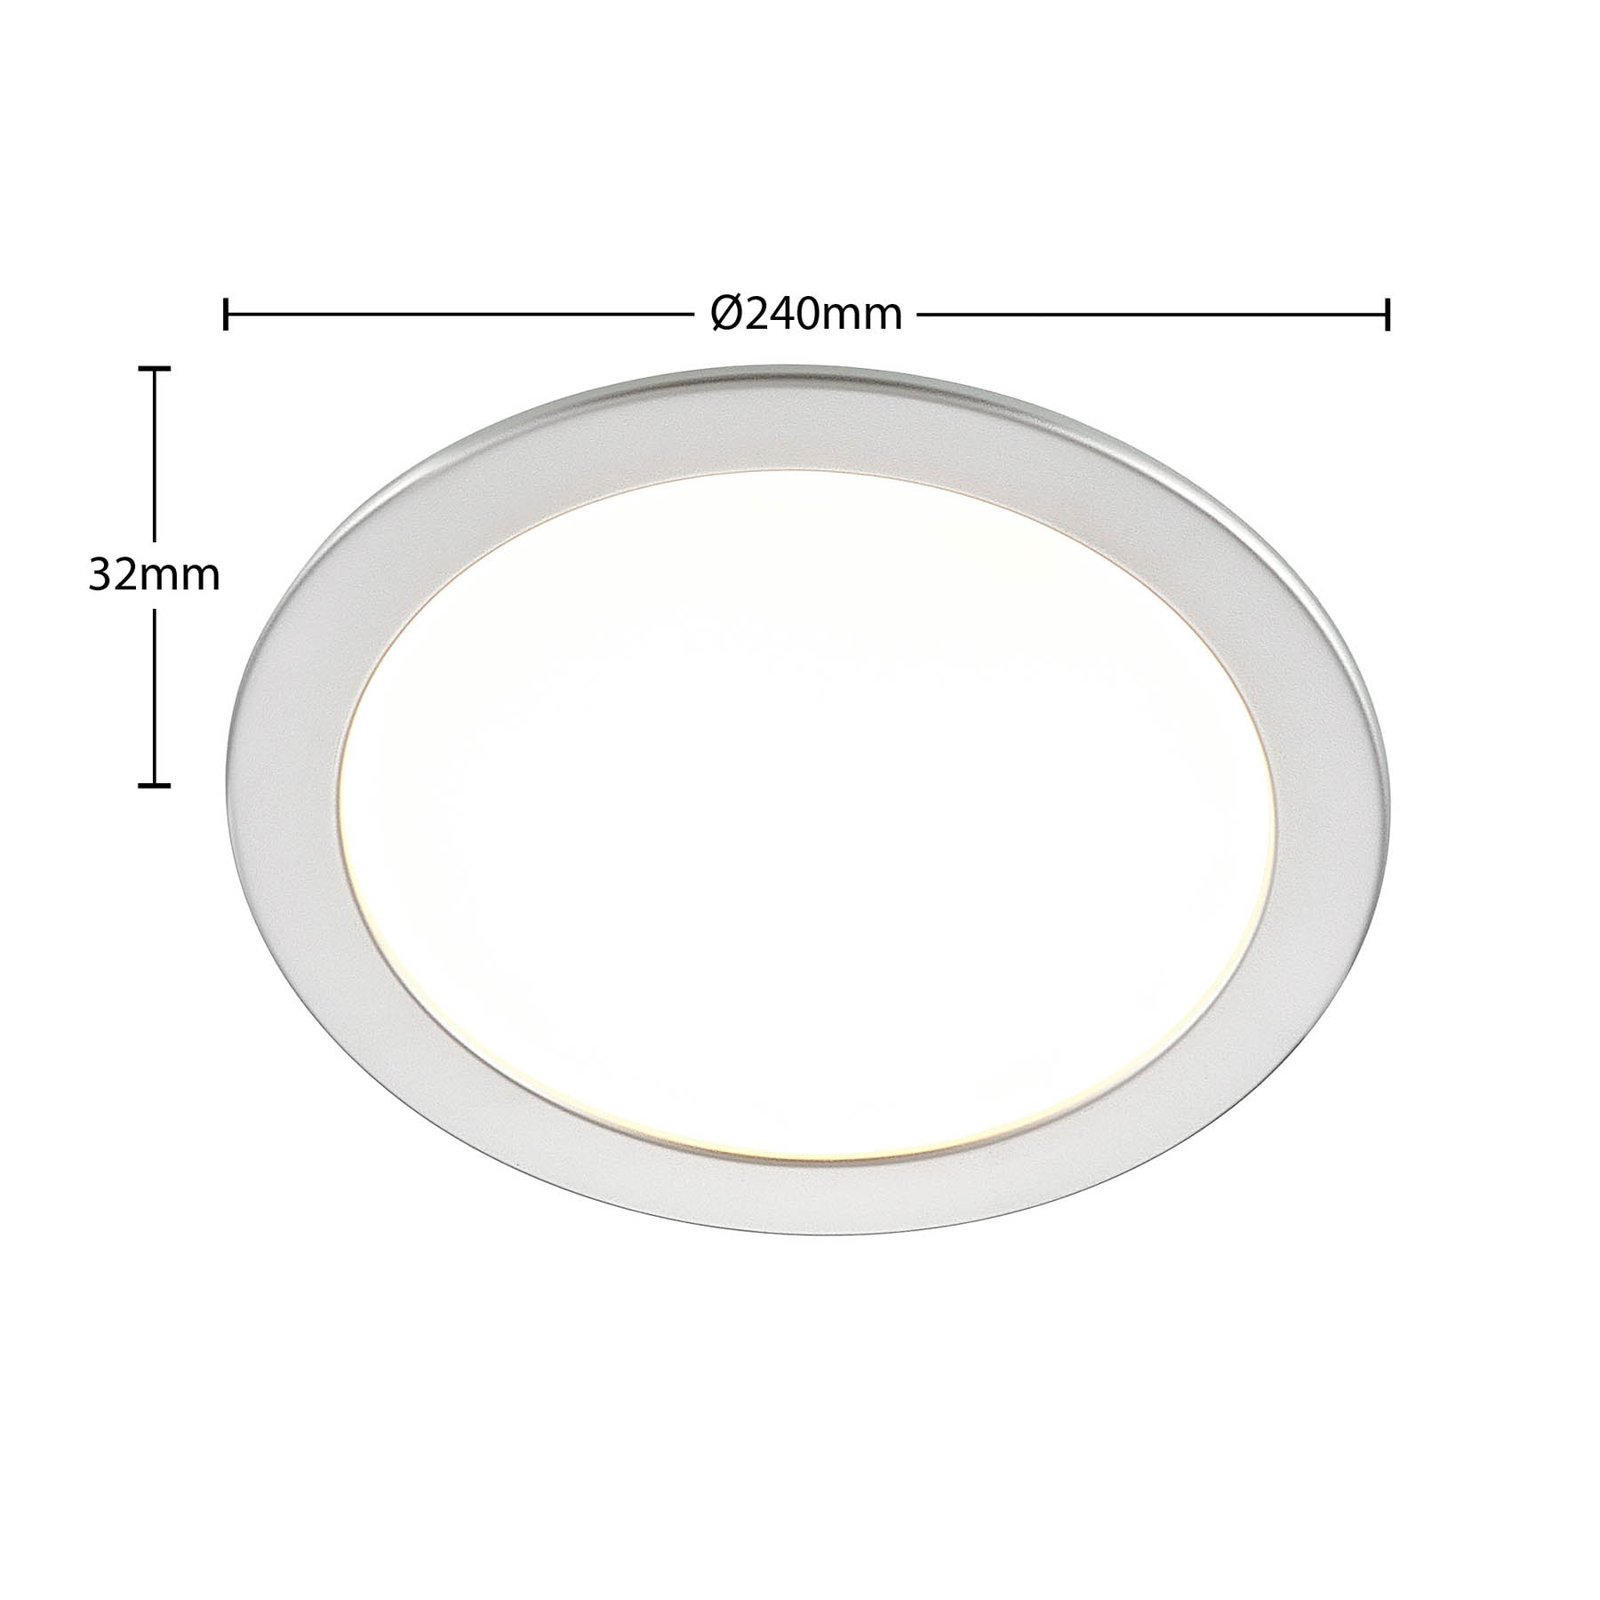 Prios Cadance LED-Einbaulampe, silber, 24 cm